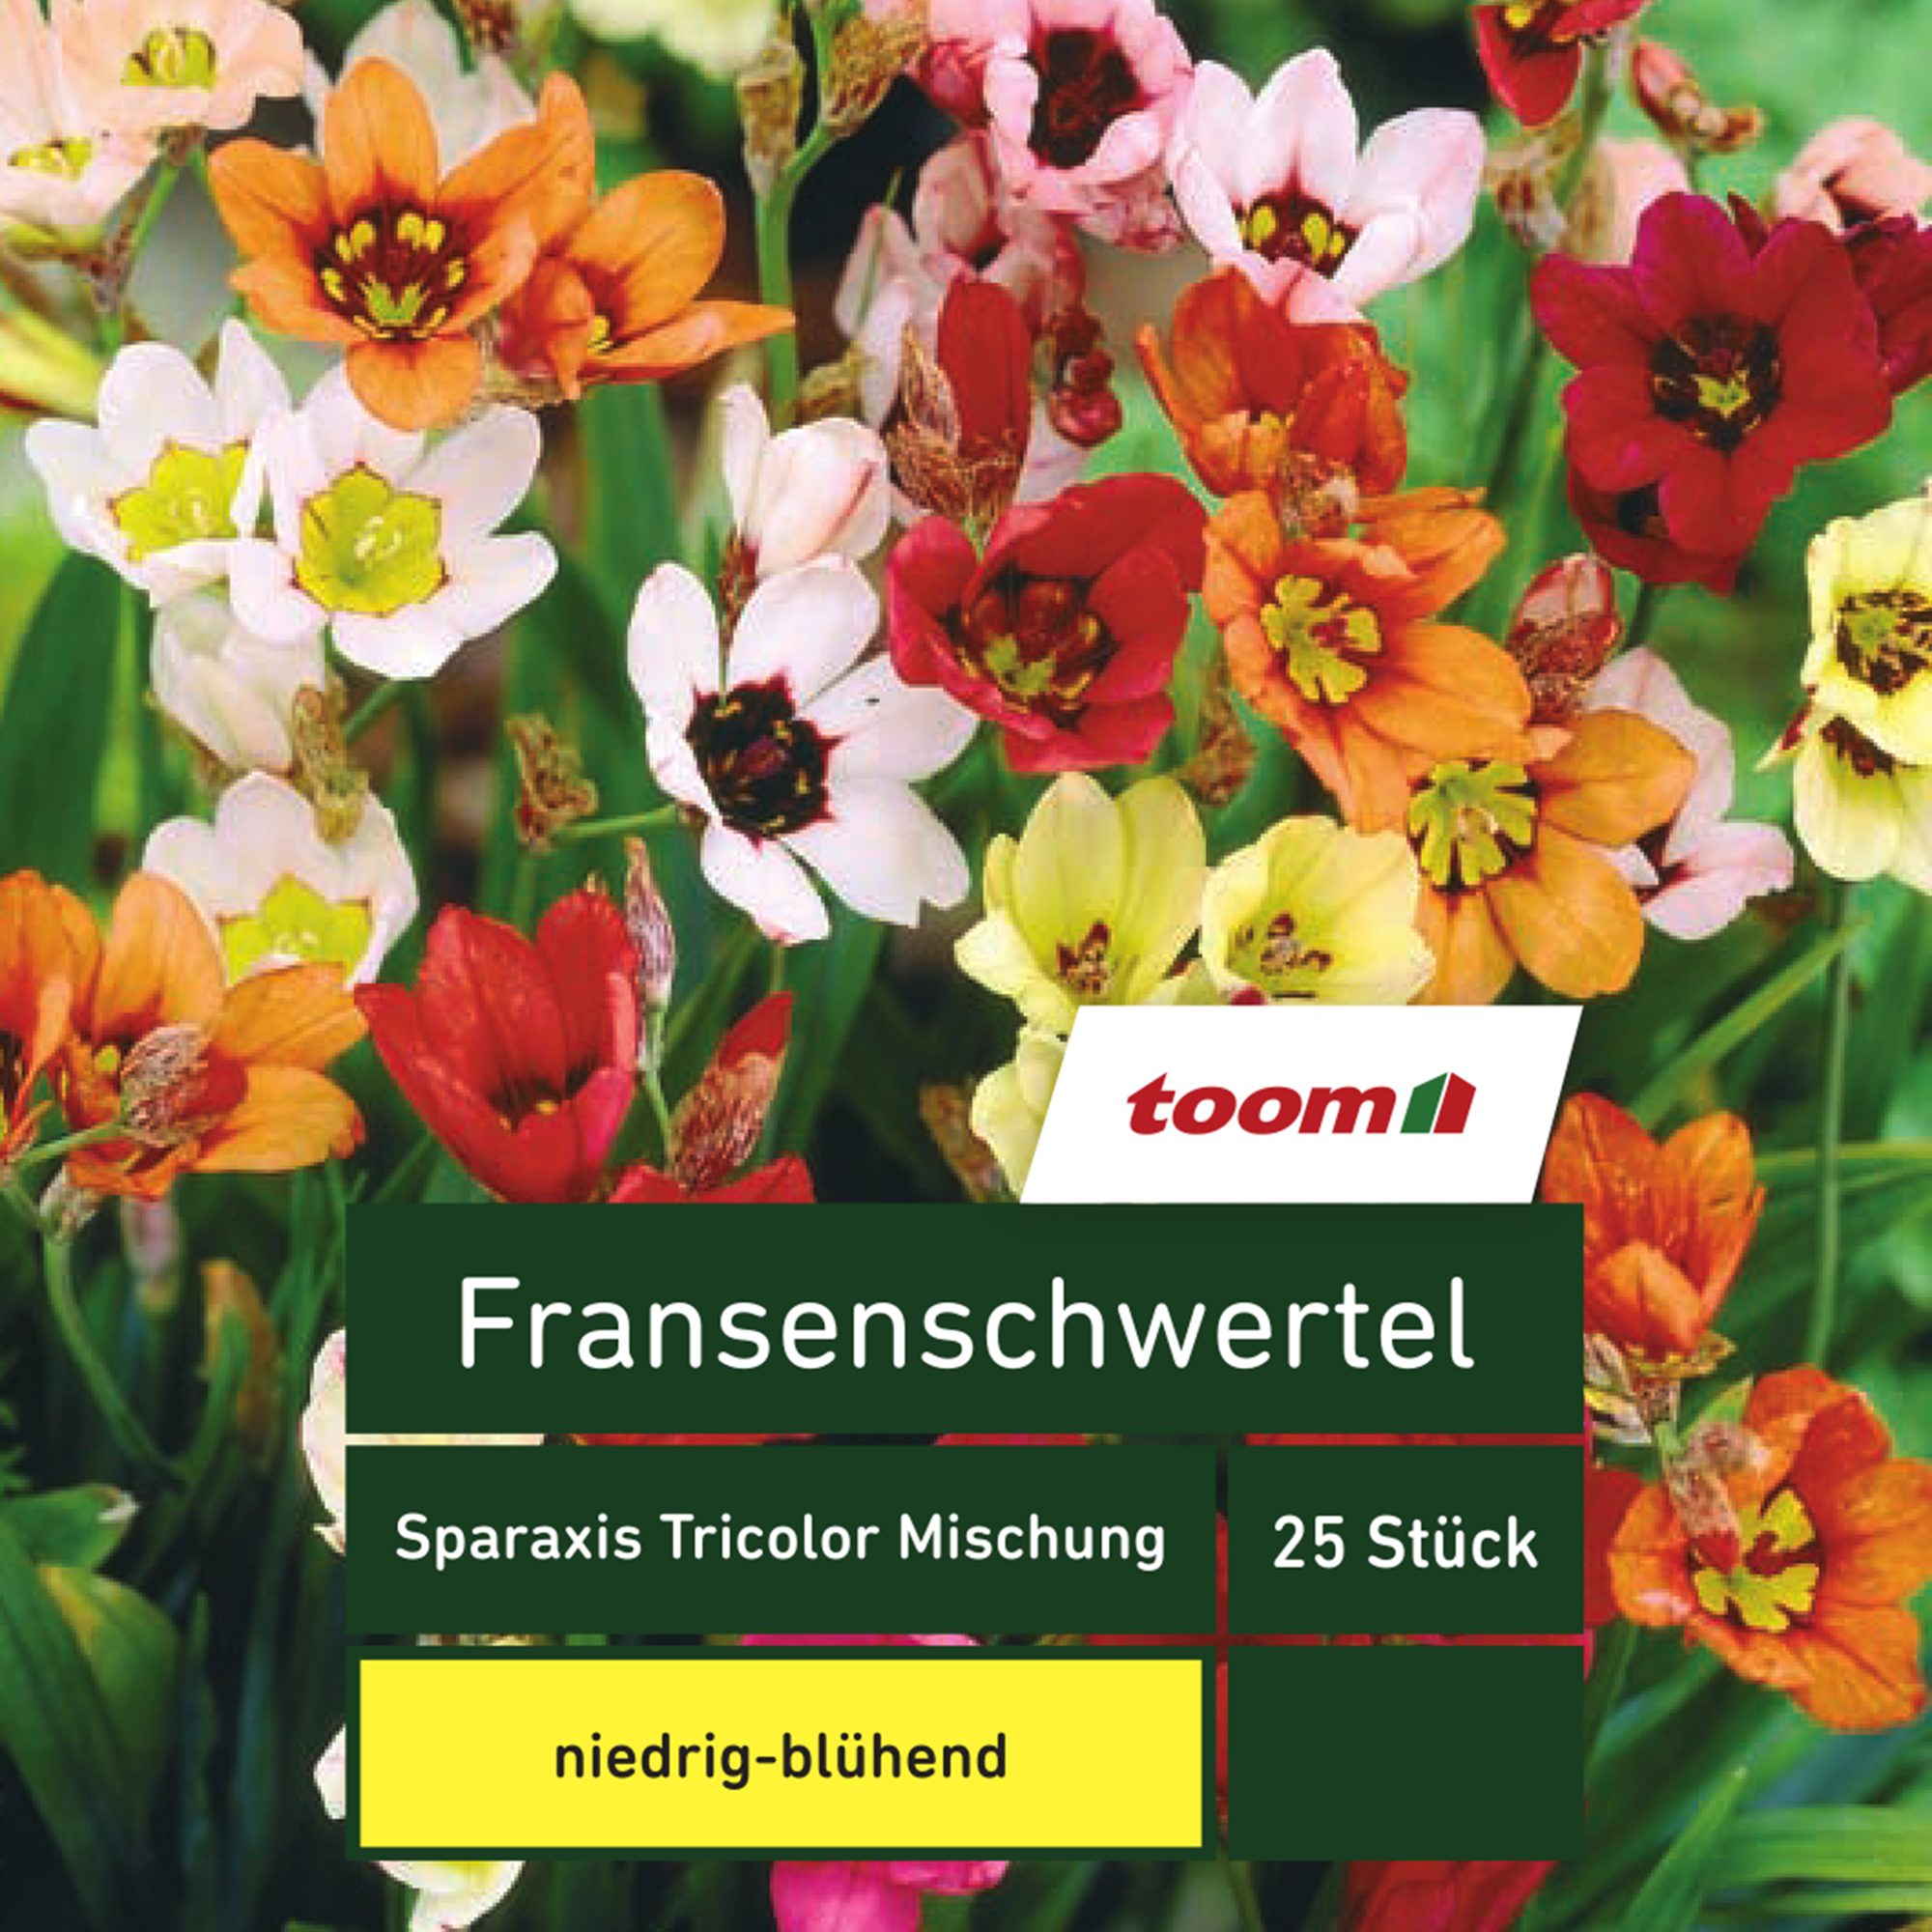 Fransenschwertel 'Sparaxis Tricolor', 25 Stück, mehrfarbig + product picture